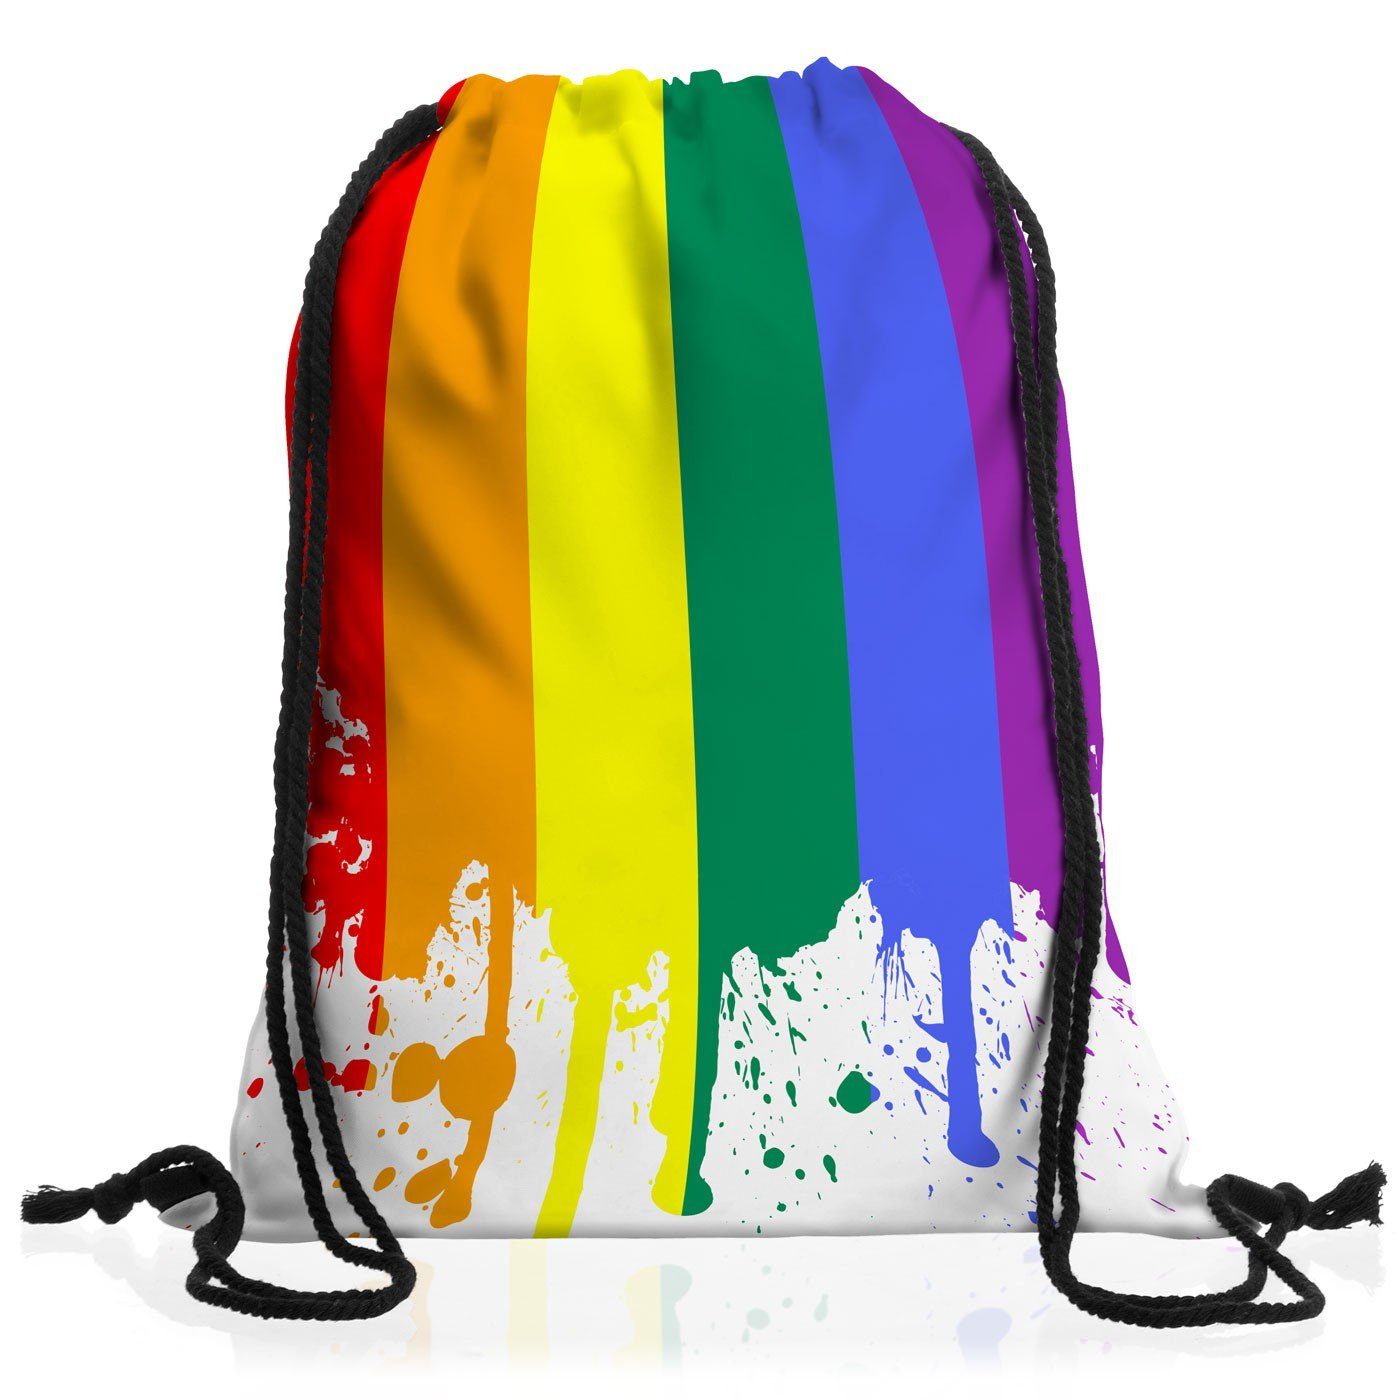 Regenbogen Pride Rucksack Beutel Henkeltasche, Demo Gleichberechtigung CSD VOID